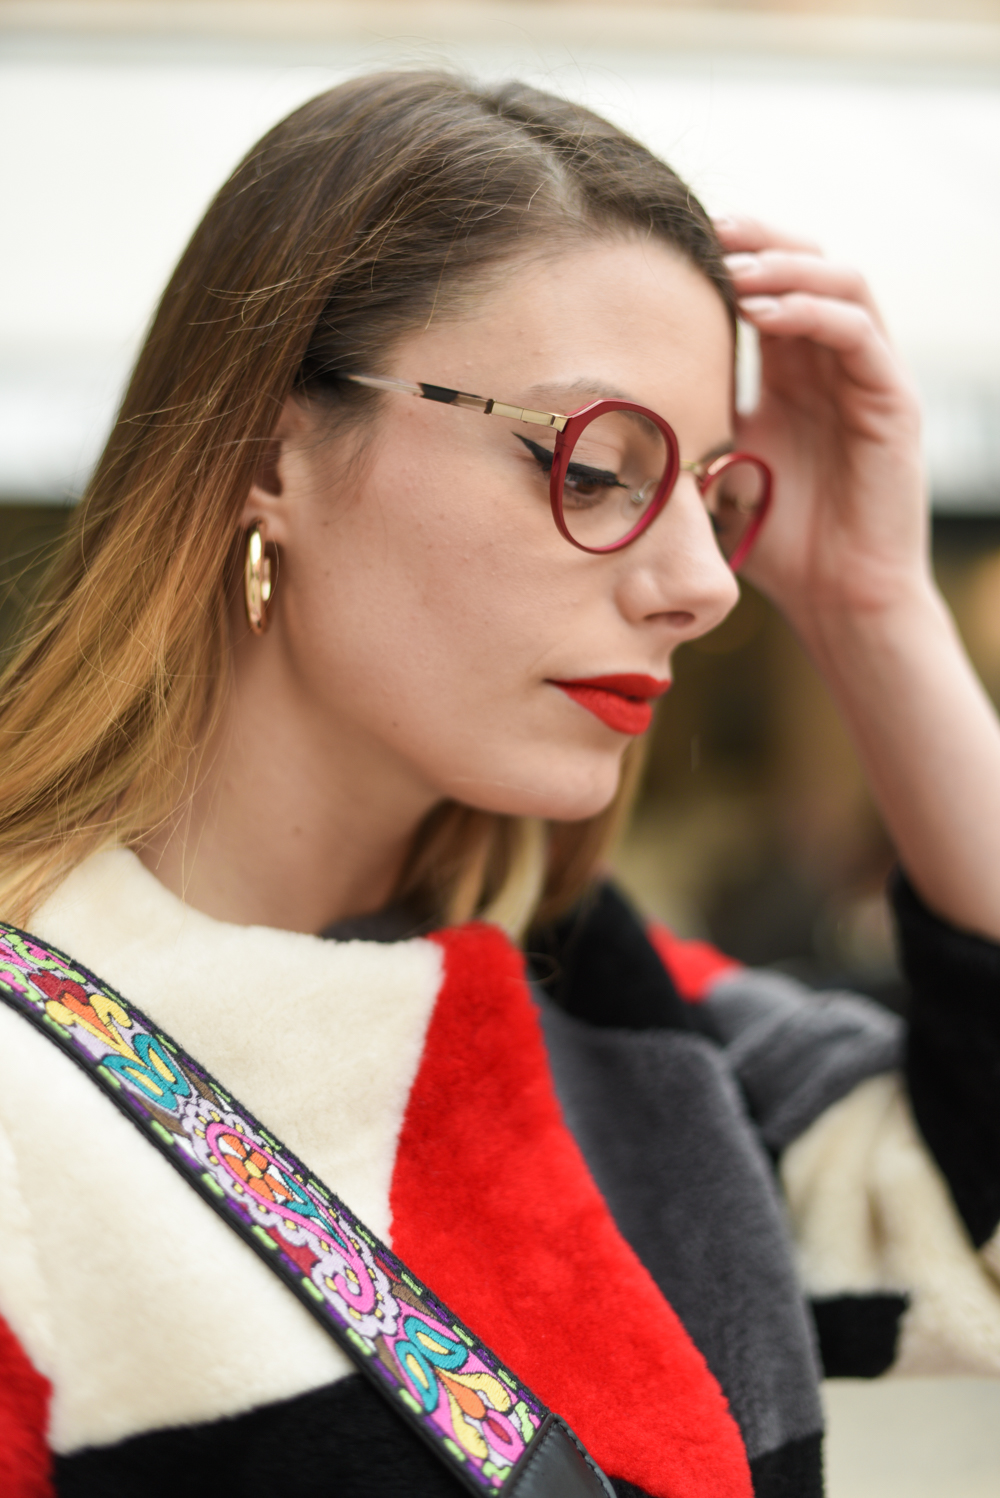 Giulia de martin behind my glasses eyewear blog influencer face a face eyeglasses optical lunettes red rouge Jackie 2 9298m -11